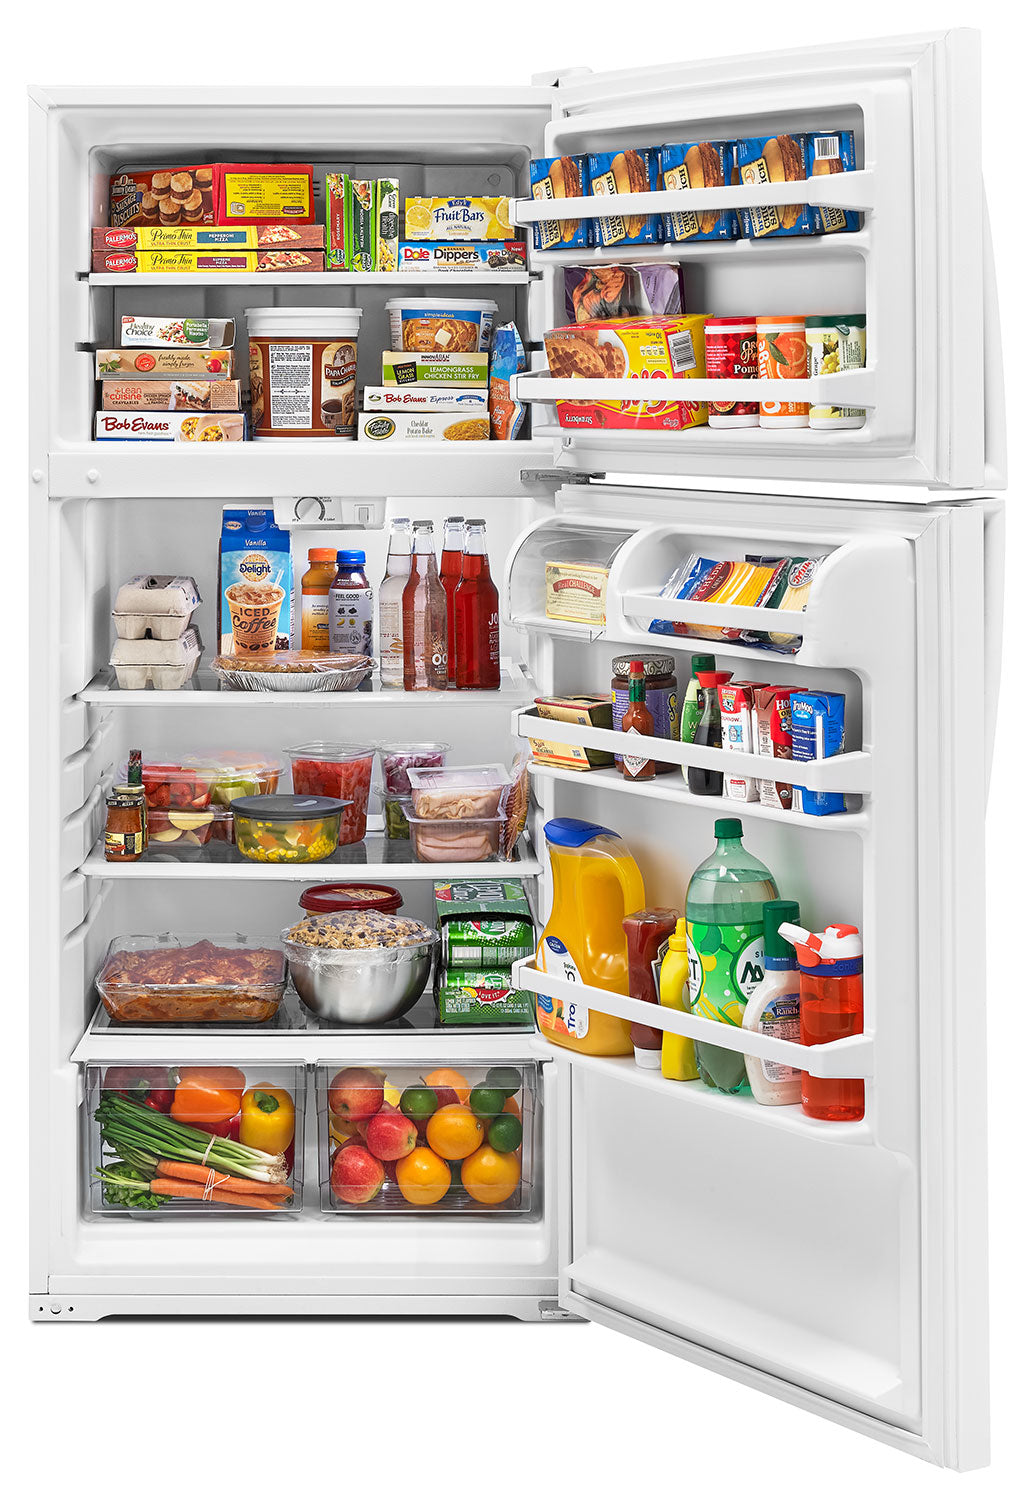 Whirlpool White Top-Freezer Refrigerator (14.3 Cu. Ft.) - WRT314TFDW